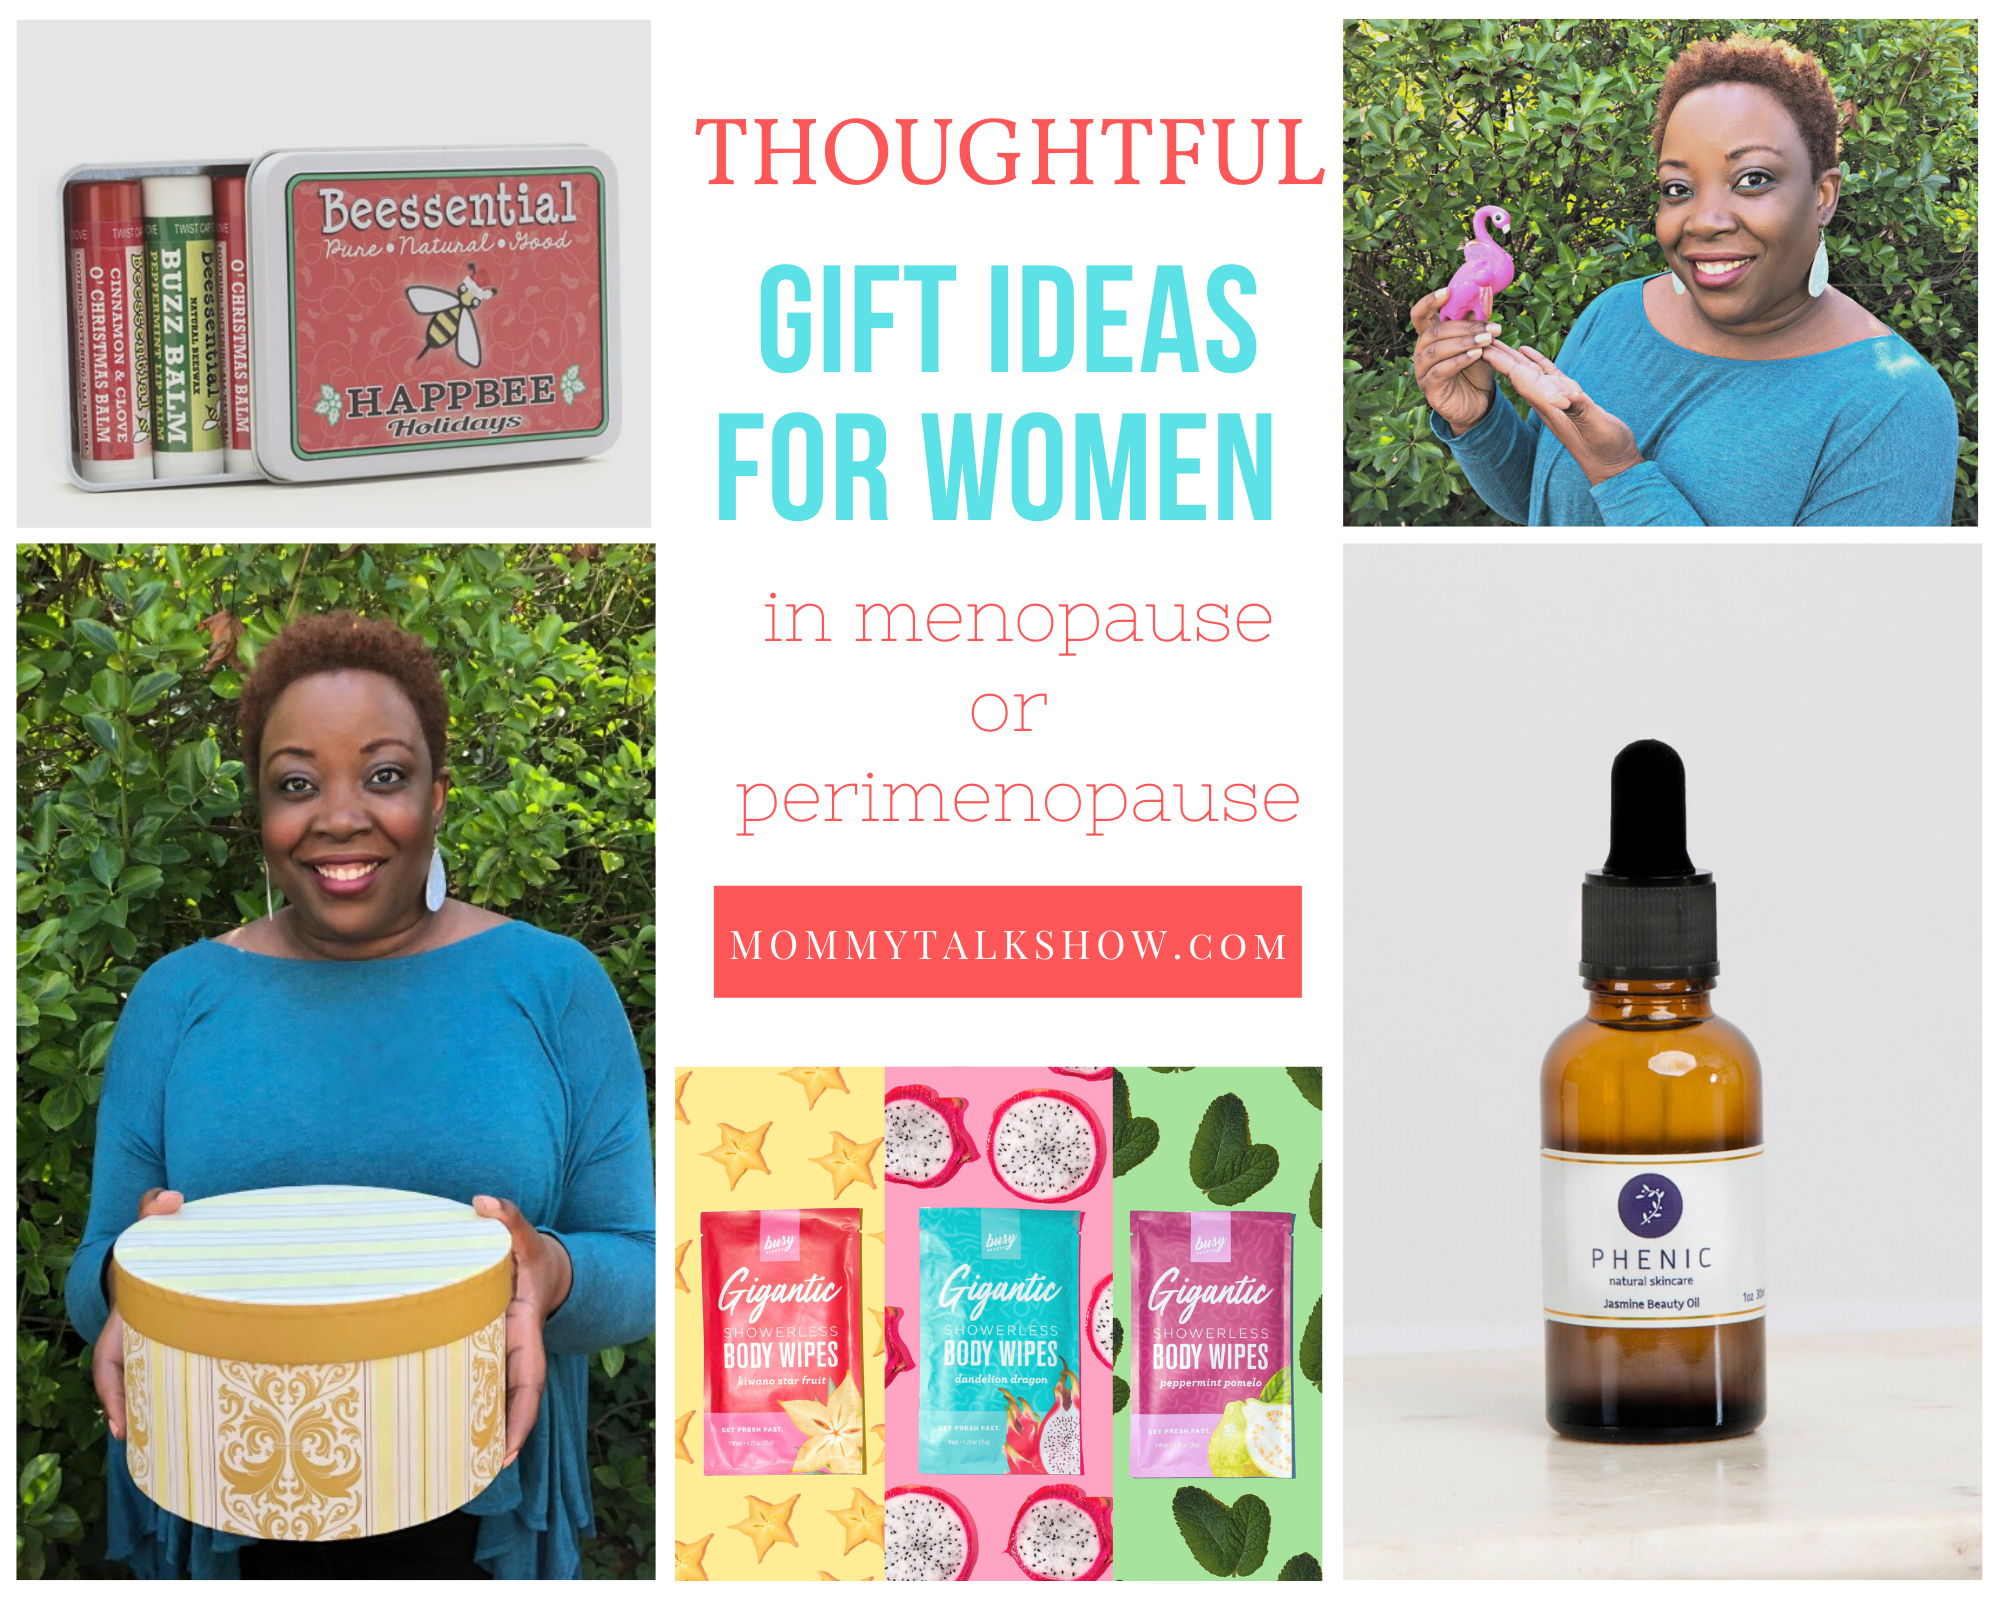 [VIDEO] Thoughtful Perimenopause & Menopause Gift Ideas